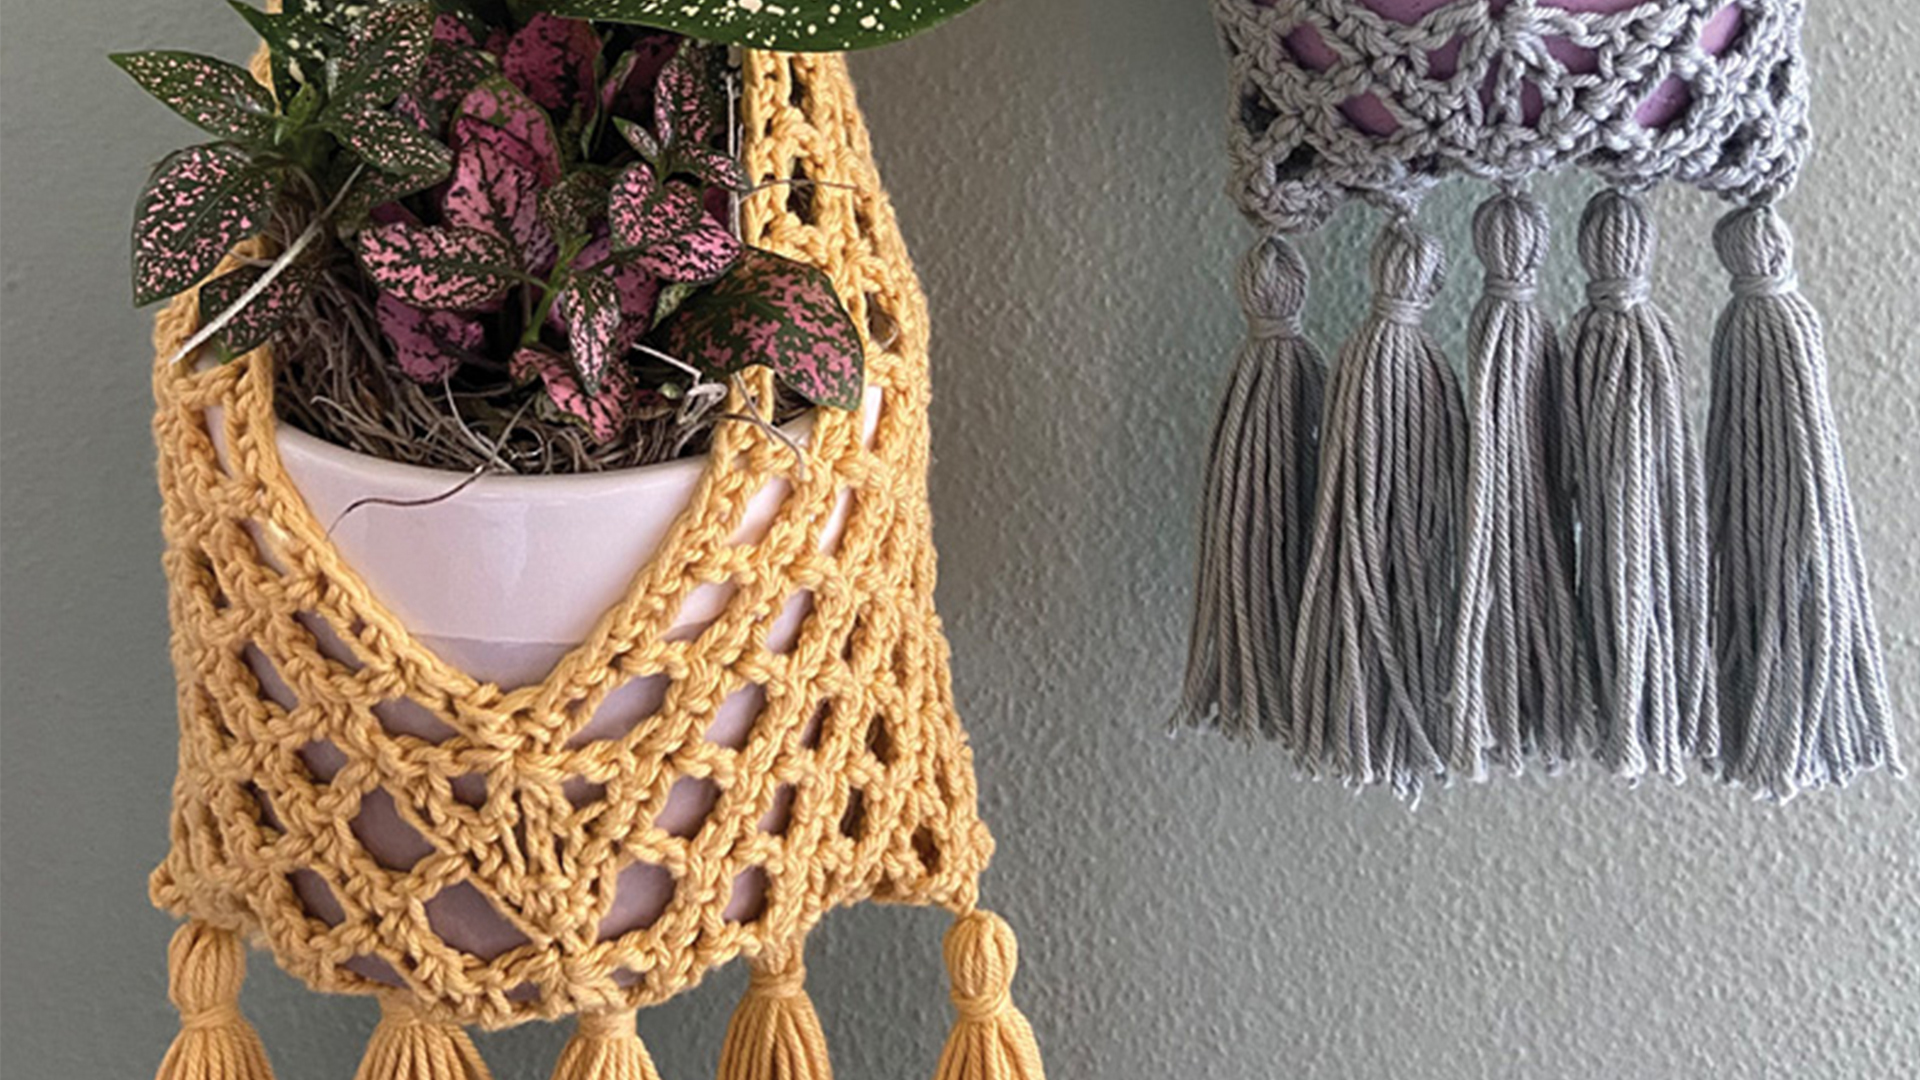 Free Crochet Pattern - Hanging Garden